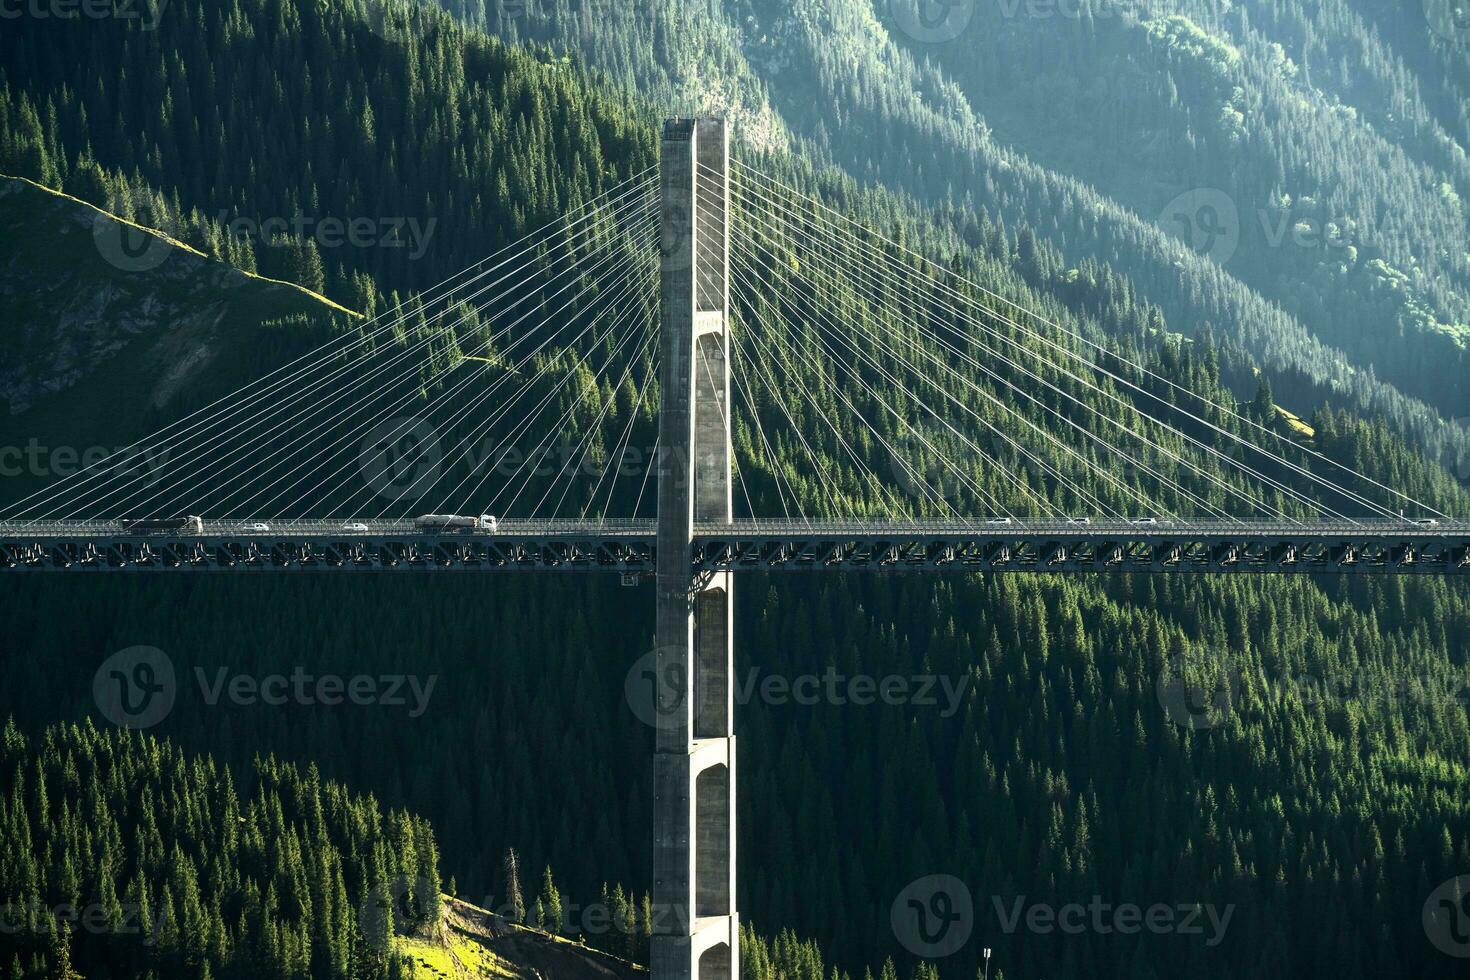 de brug tussen de bergen. guozigou brug in xinjiang, China. foto